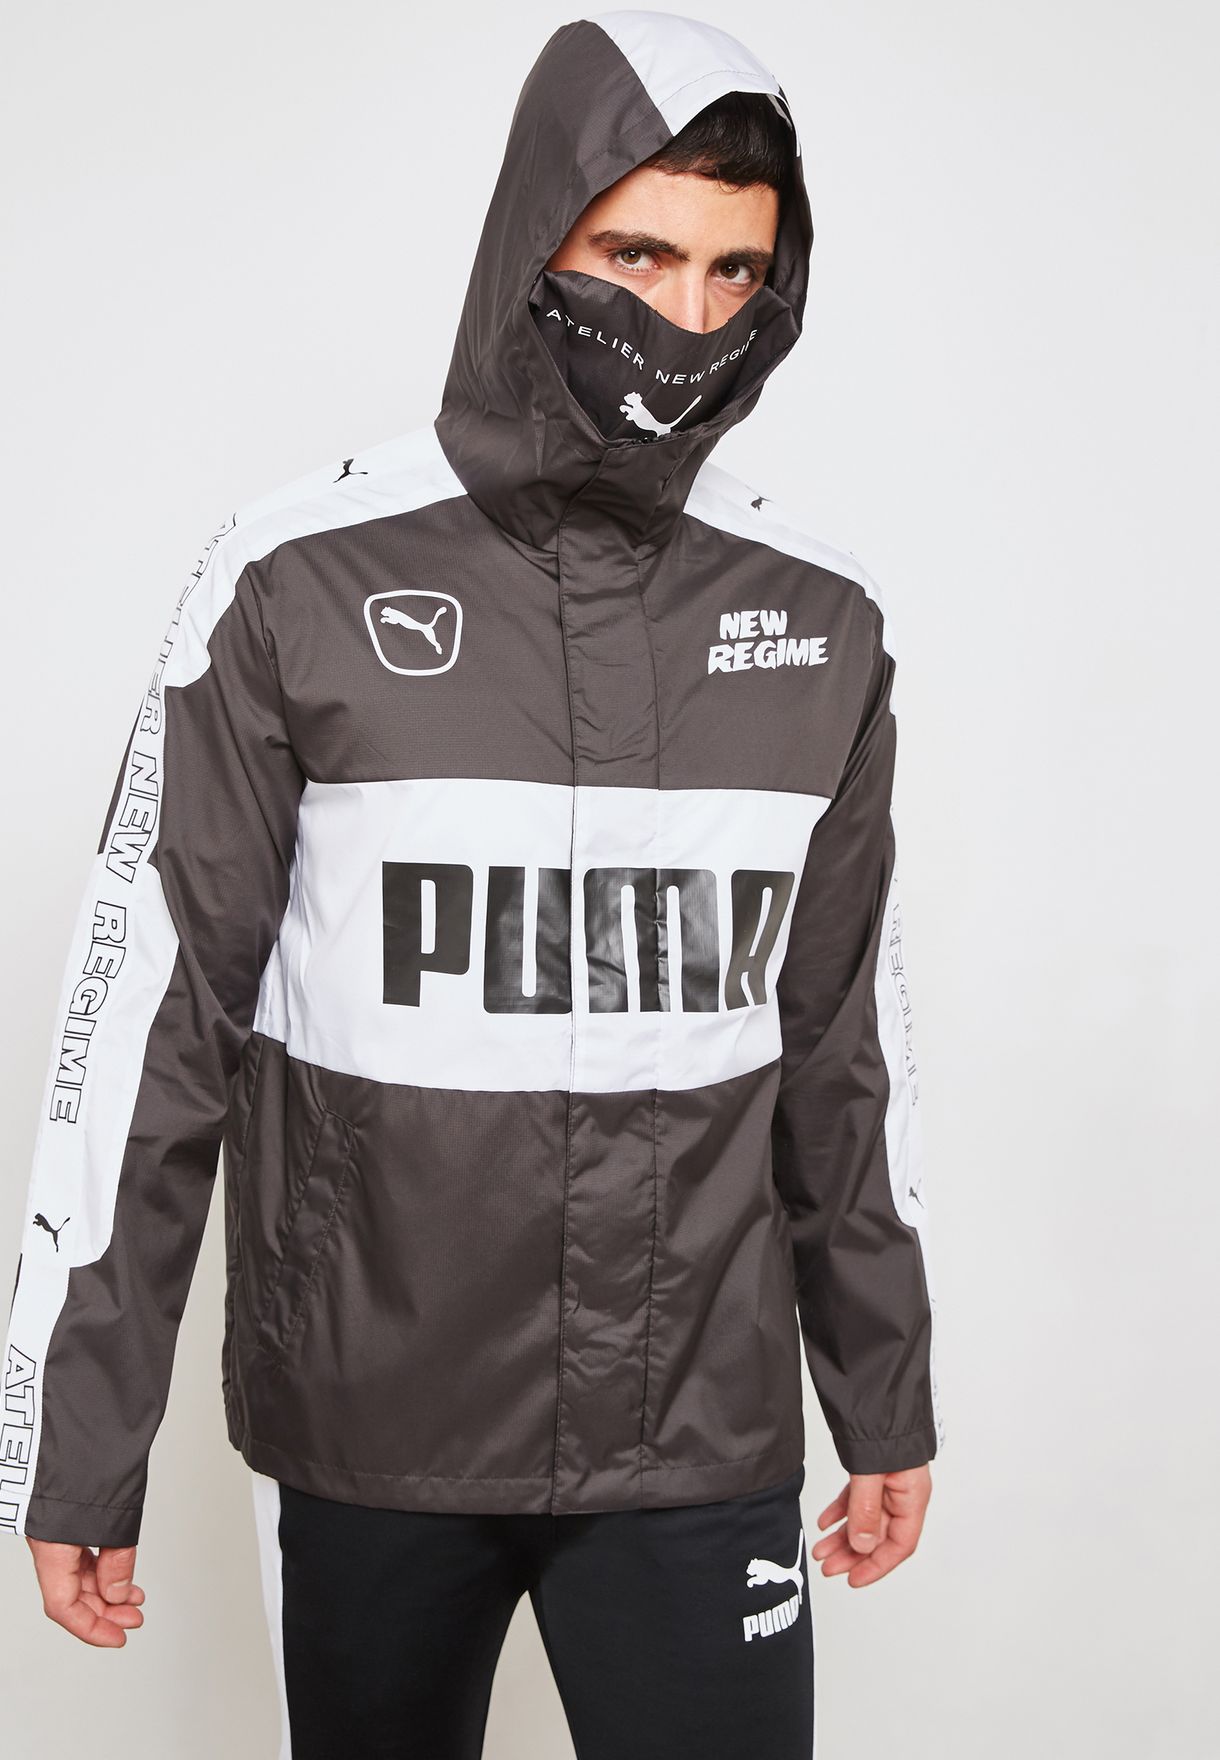 puma x atelier new regime jacket - 54 